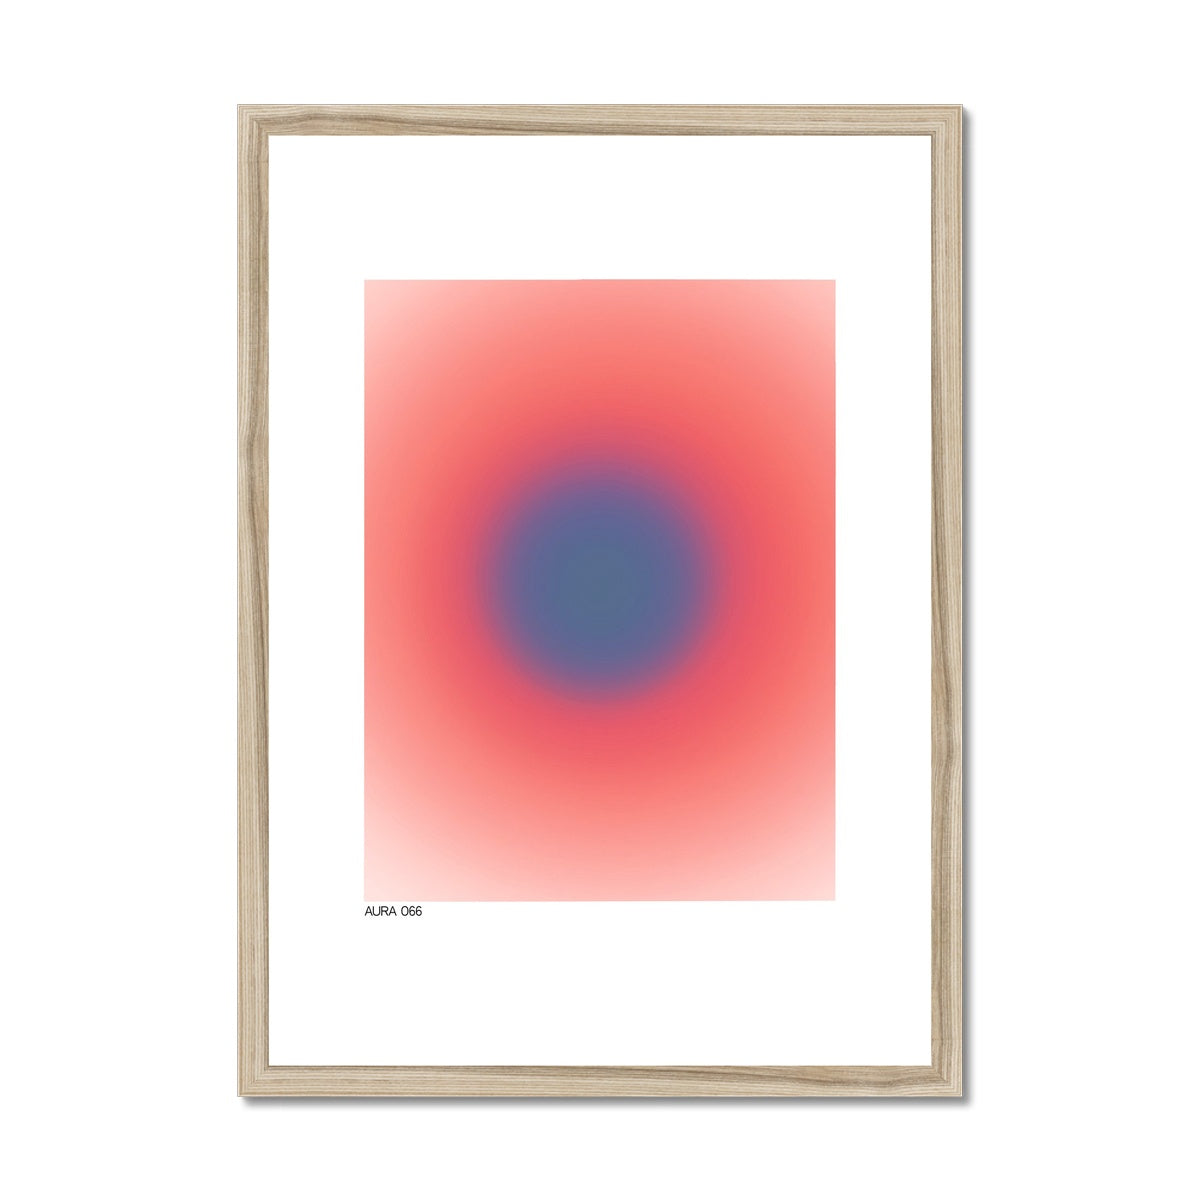 aura 066 Framed & Mounted Print